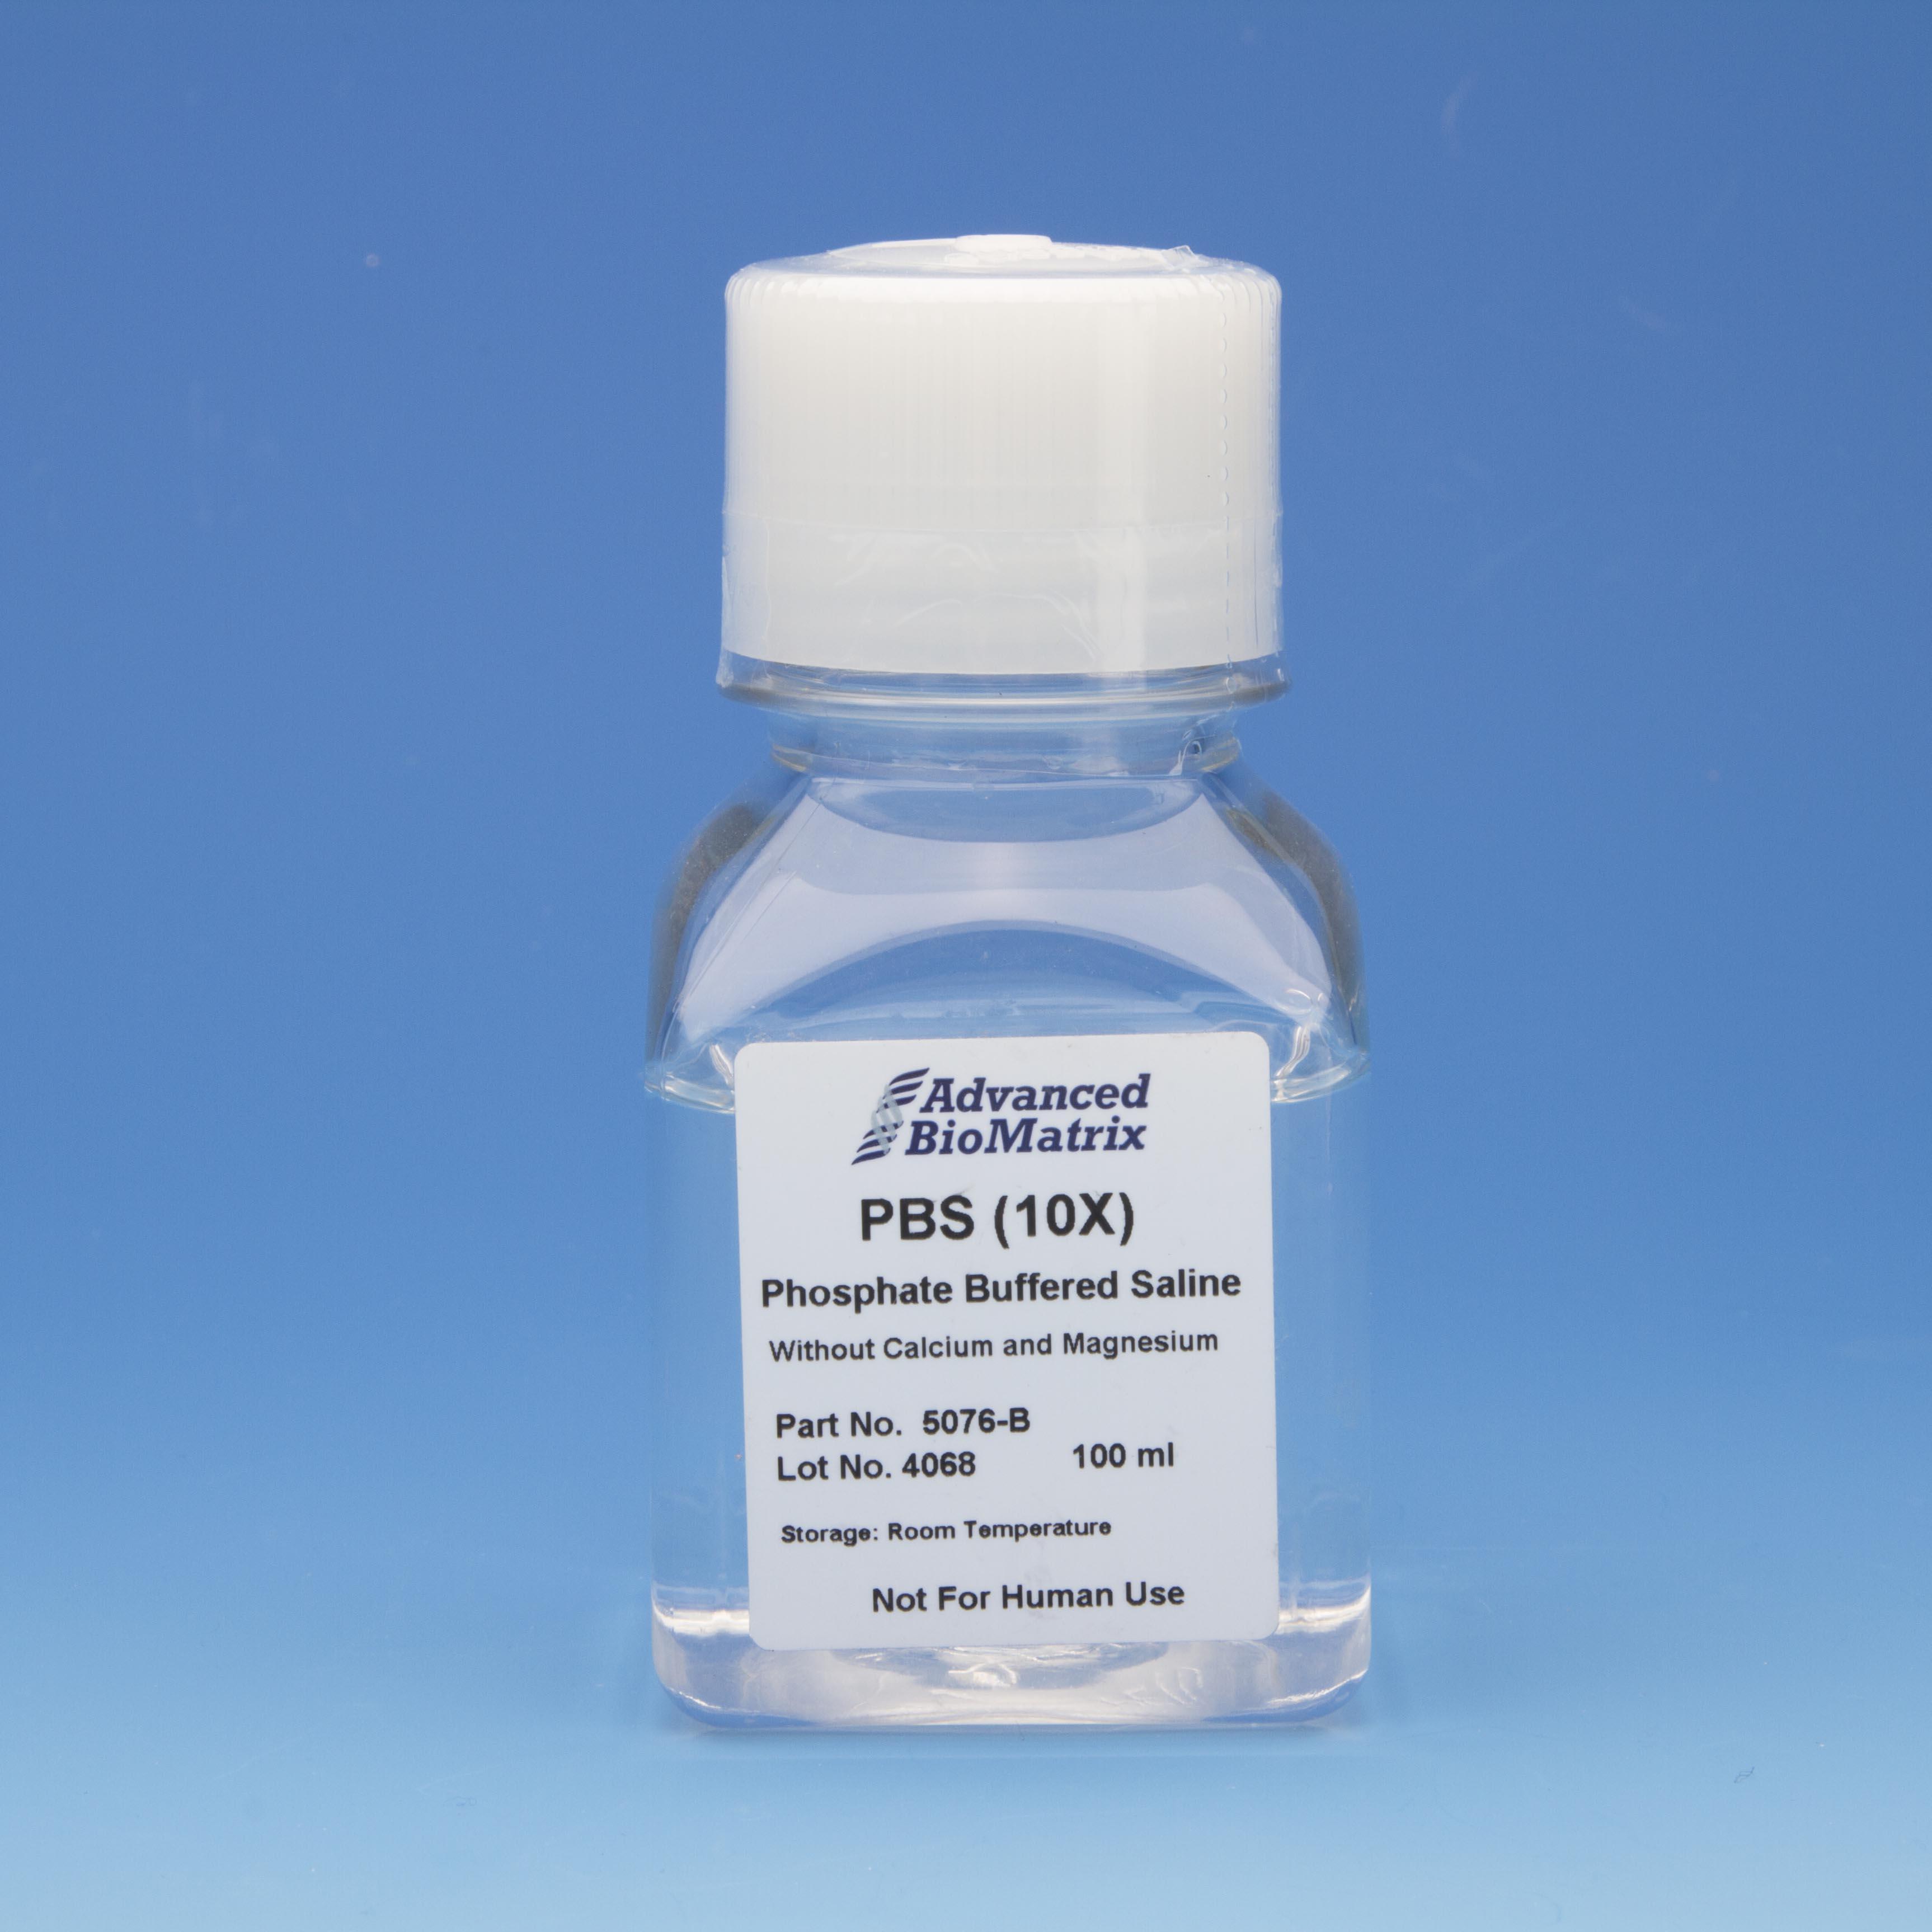 phosphate buffered saline PBS from advanced biomatrix